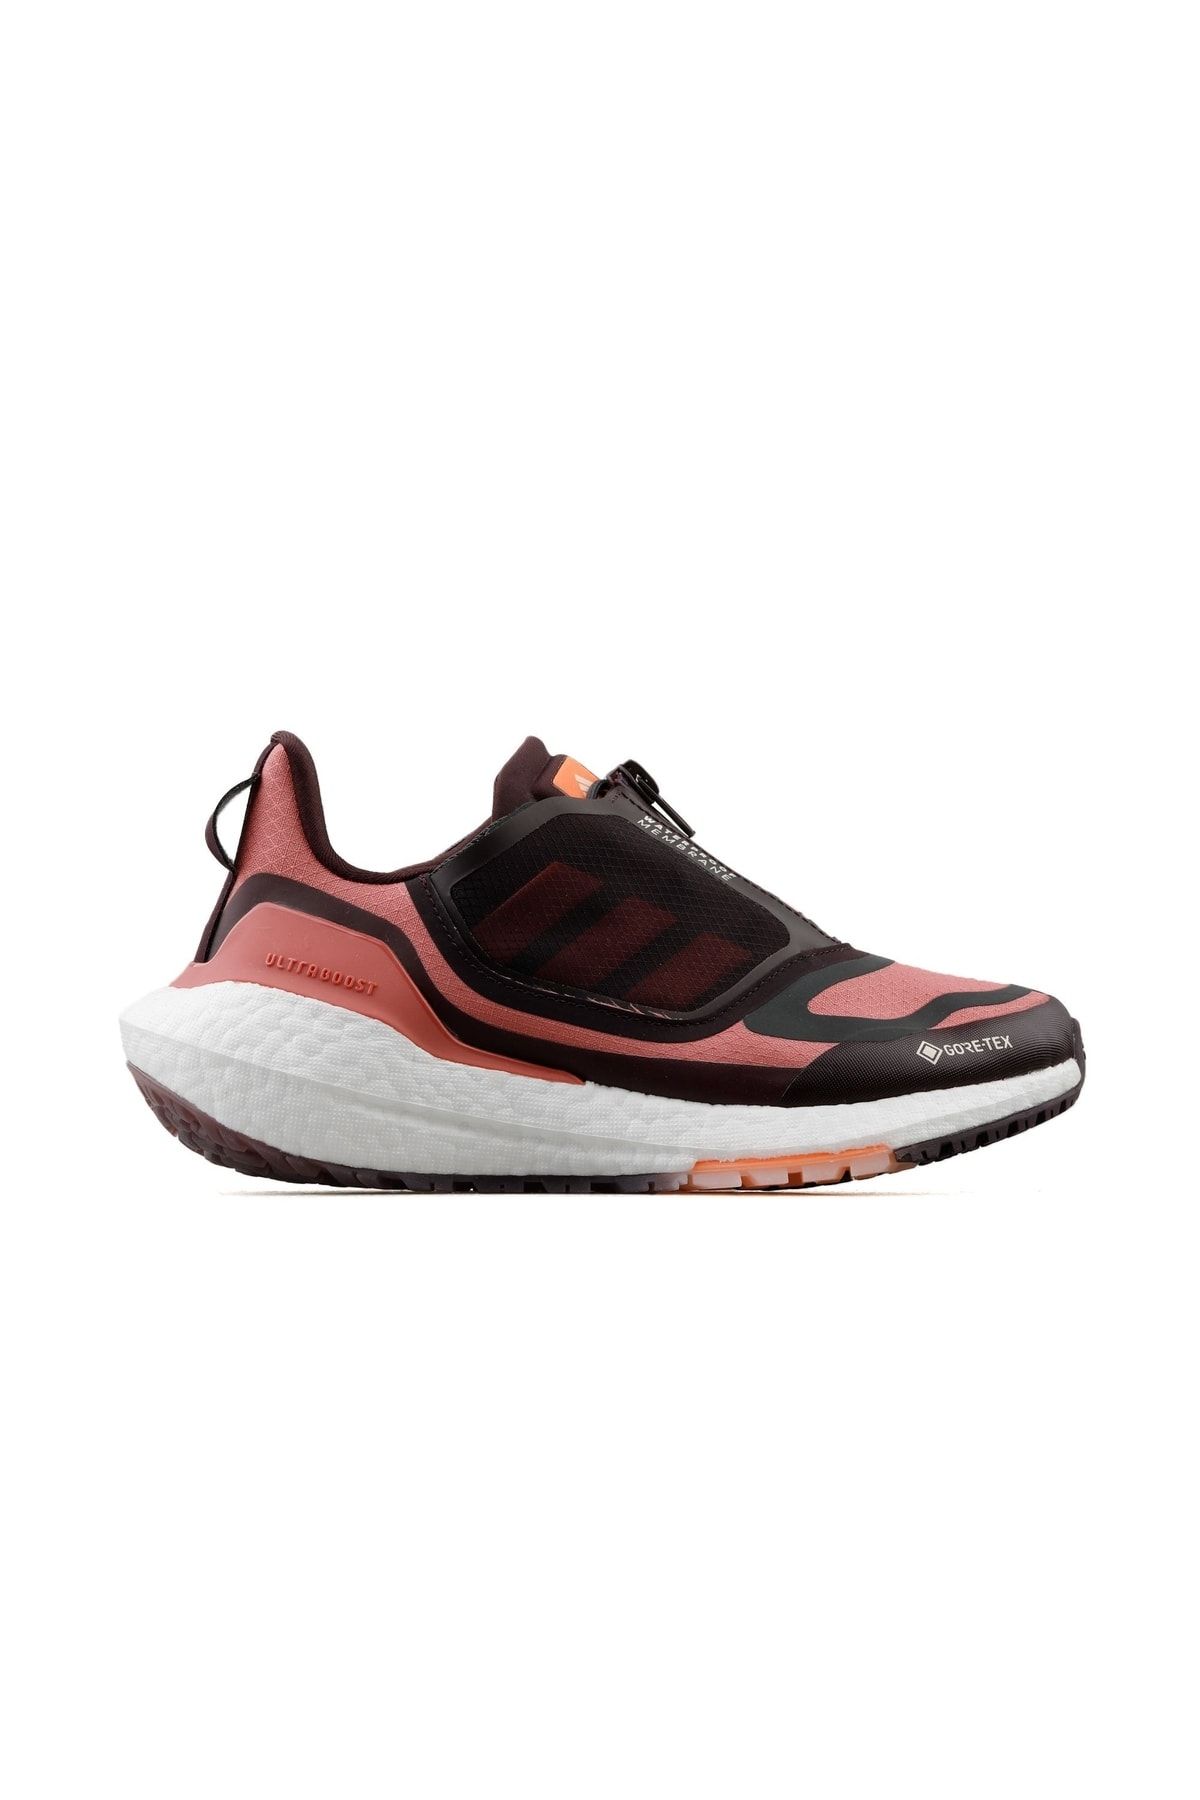 adidas Ultraboost 22 Gtx W Kadın Koşu Ayakkabısı Gx9131 Renkli